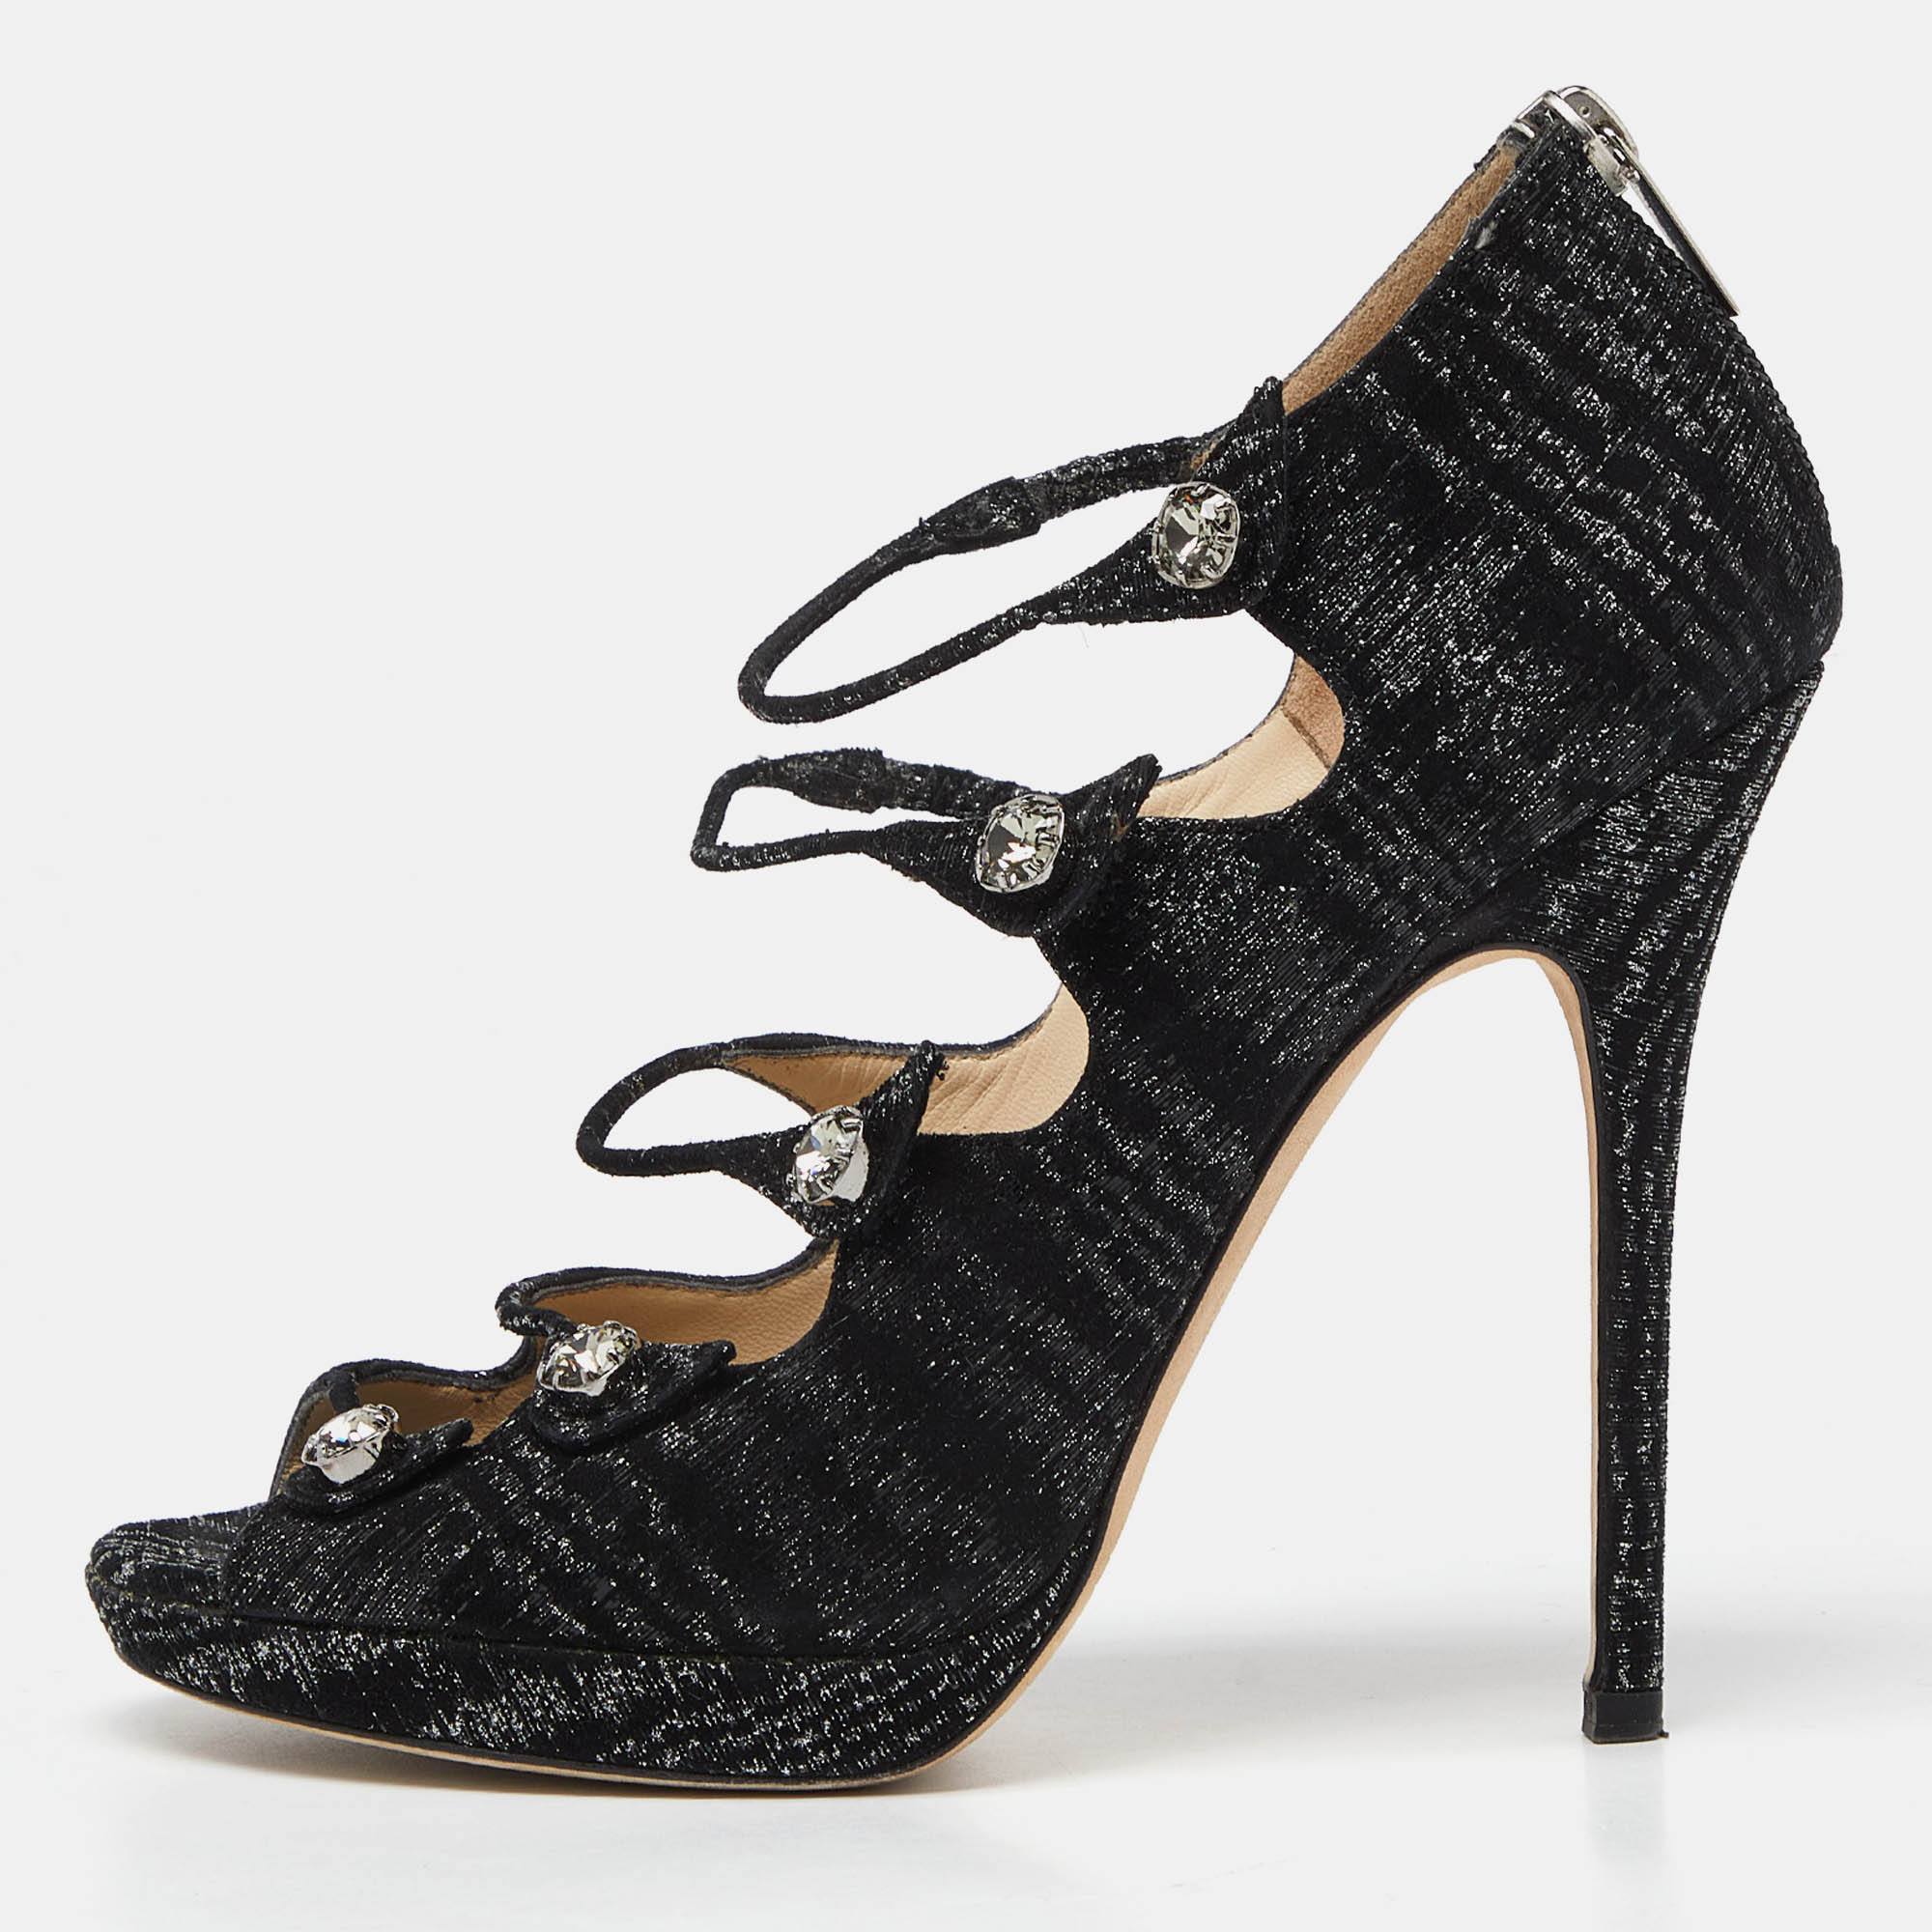 Jimmy choo black lurex fabric platform strap sandals size 37.5